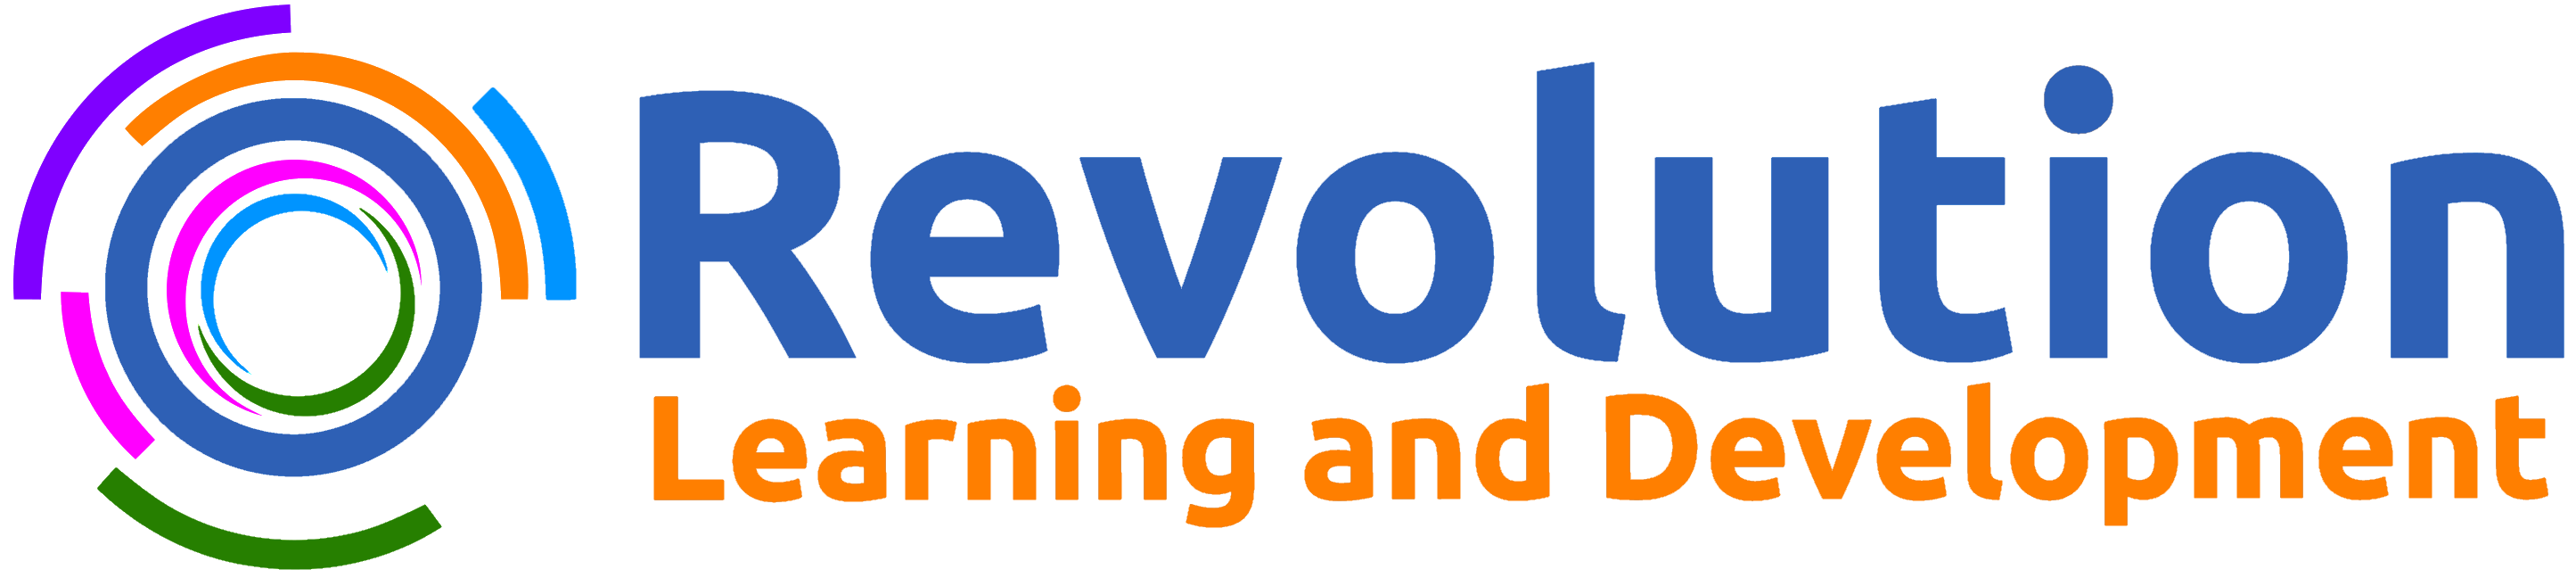 Revolution Learning and Development – Latvia